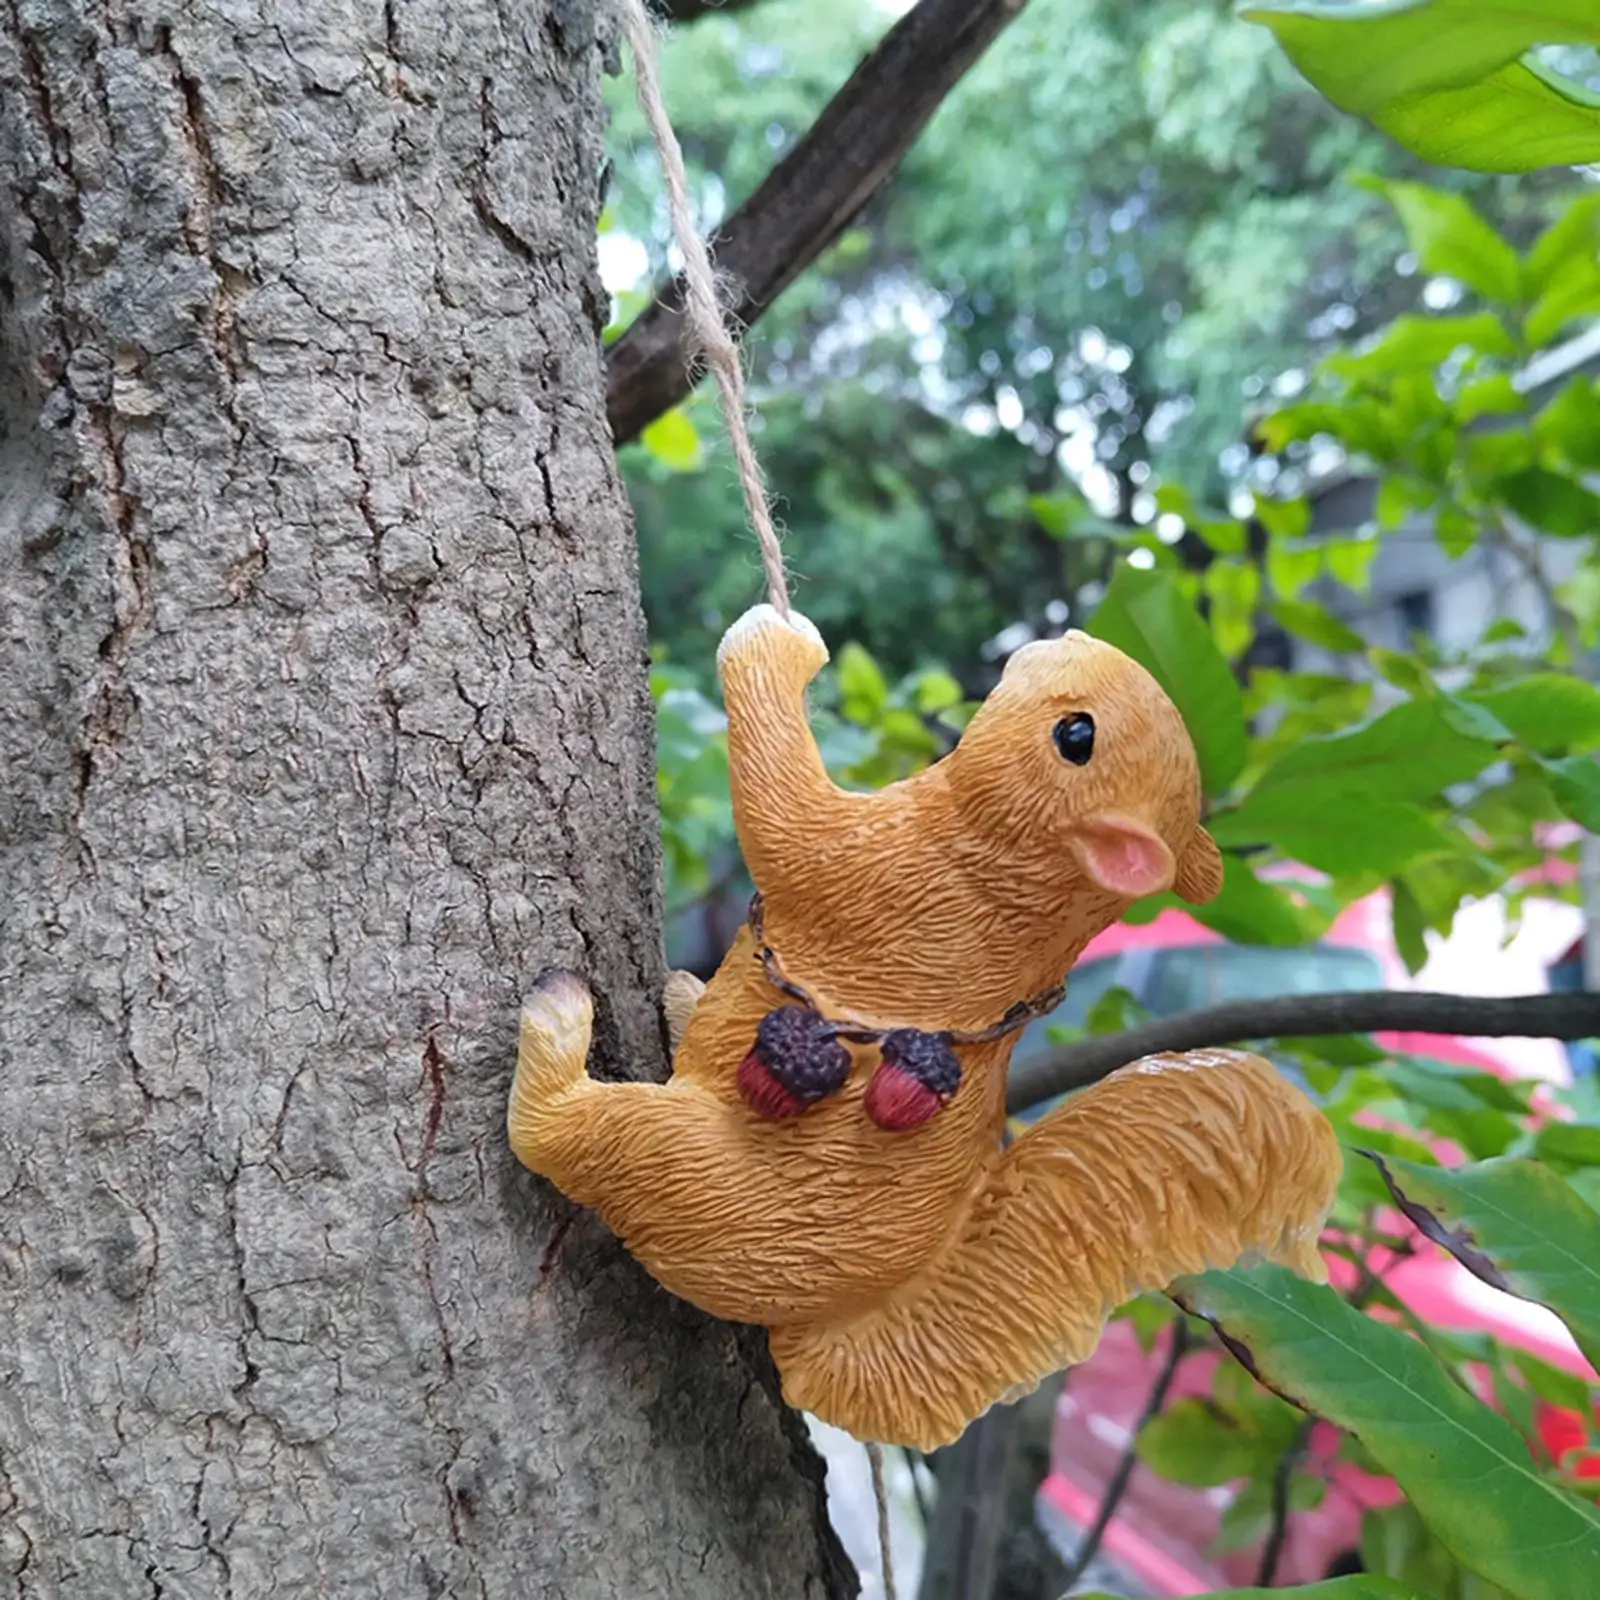 Climbing Animal Figurine Handmade Sculpture Resin for Patio Balcony Outdoor